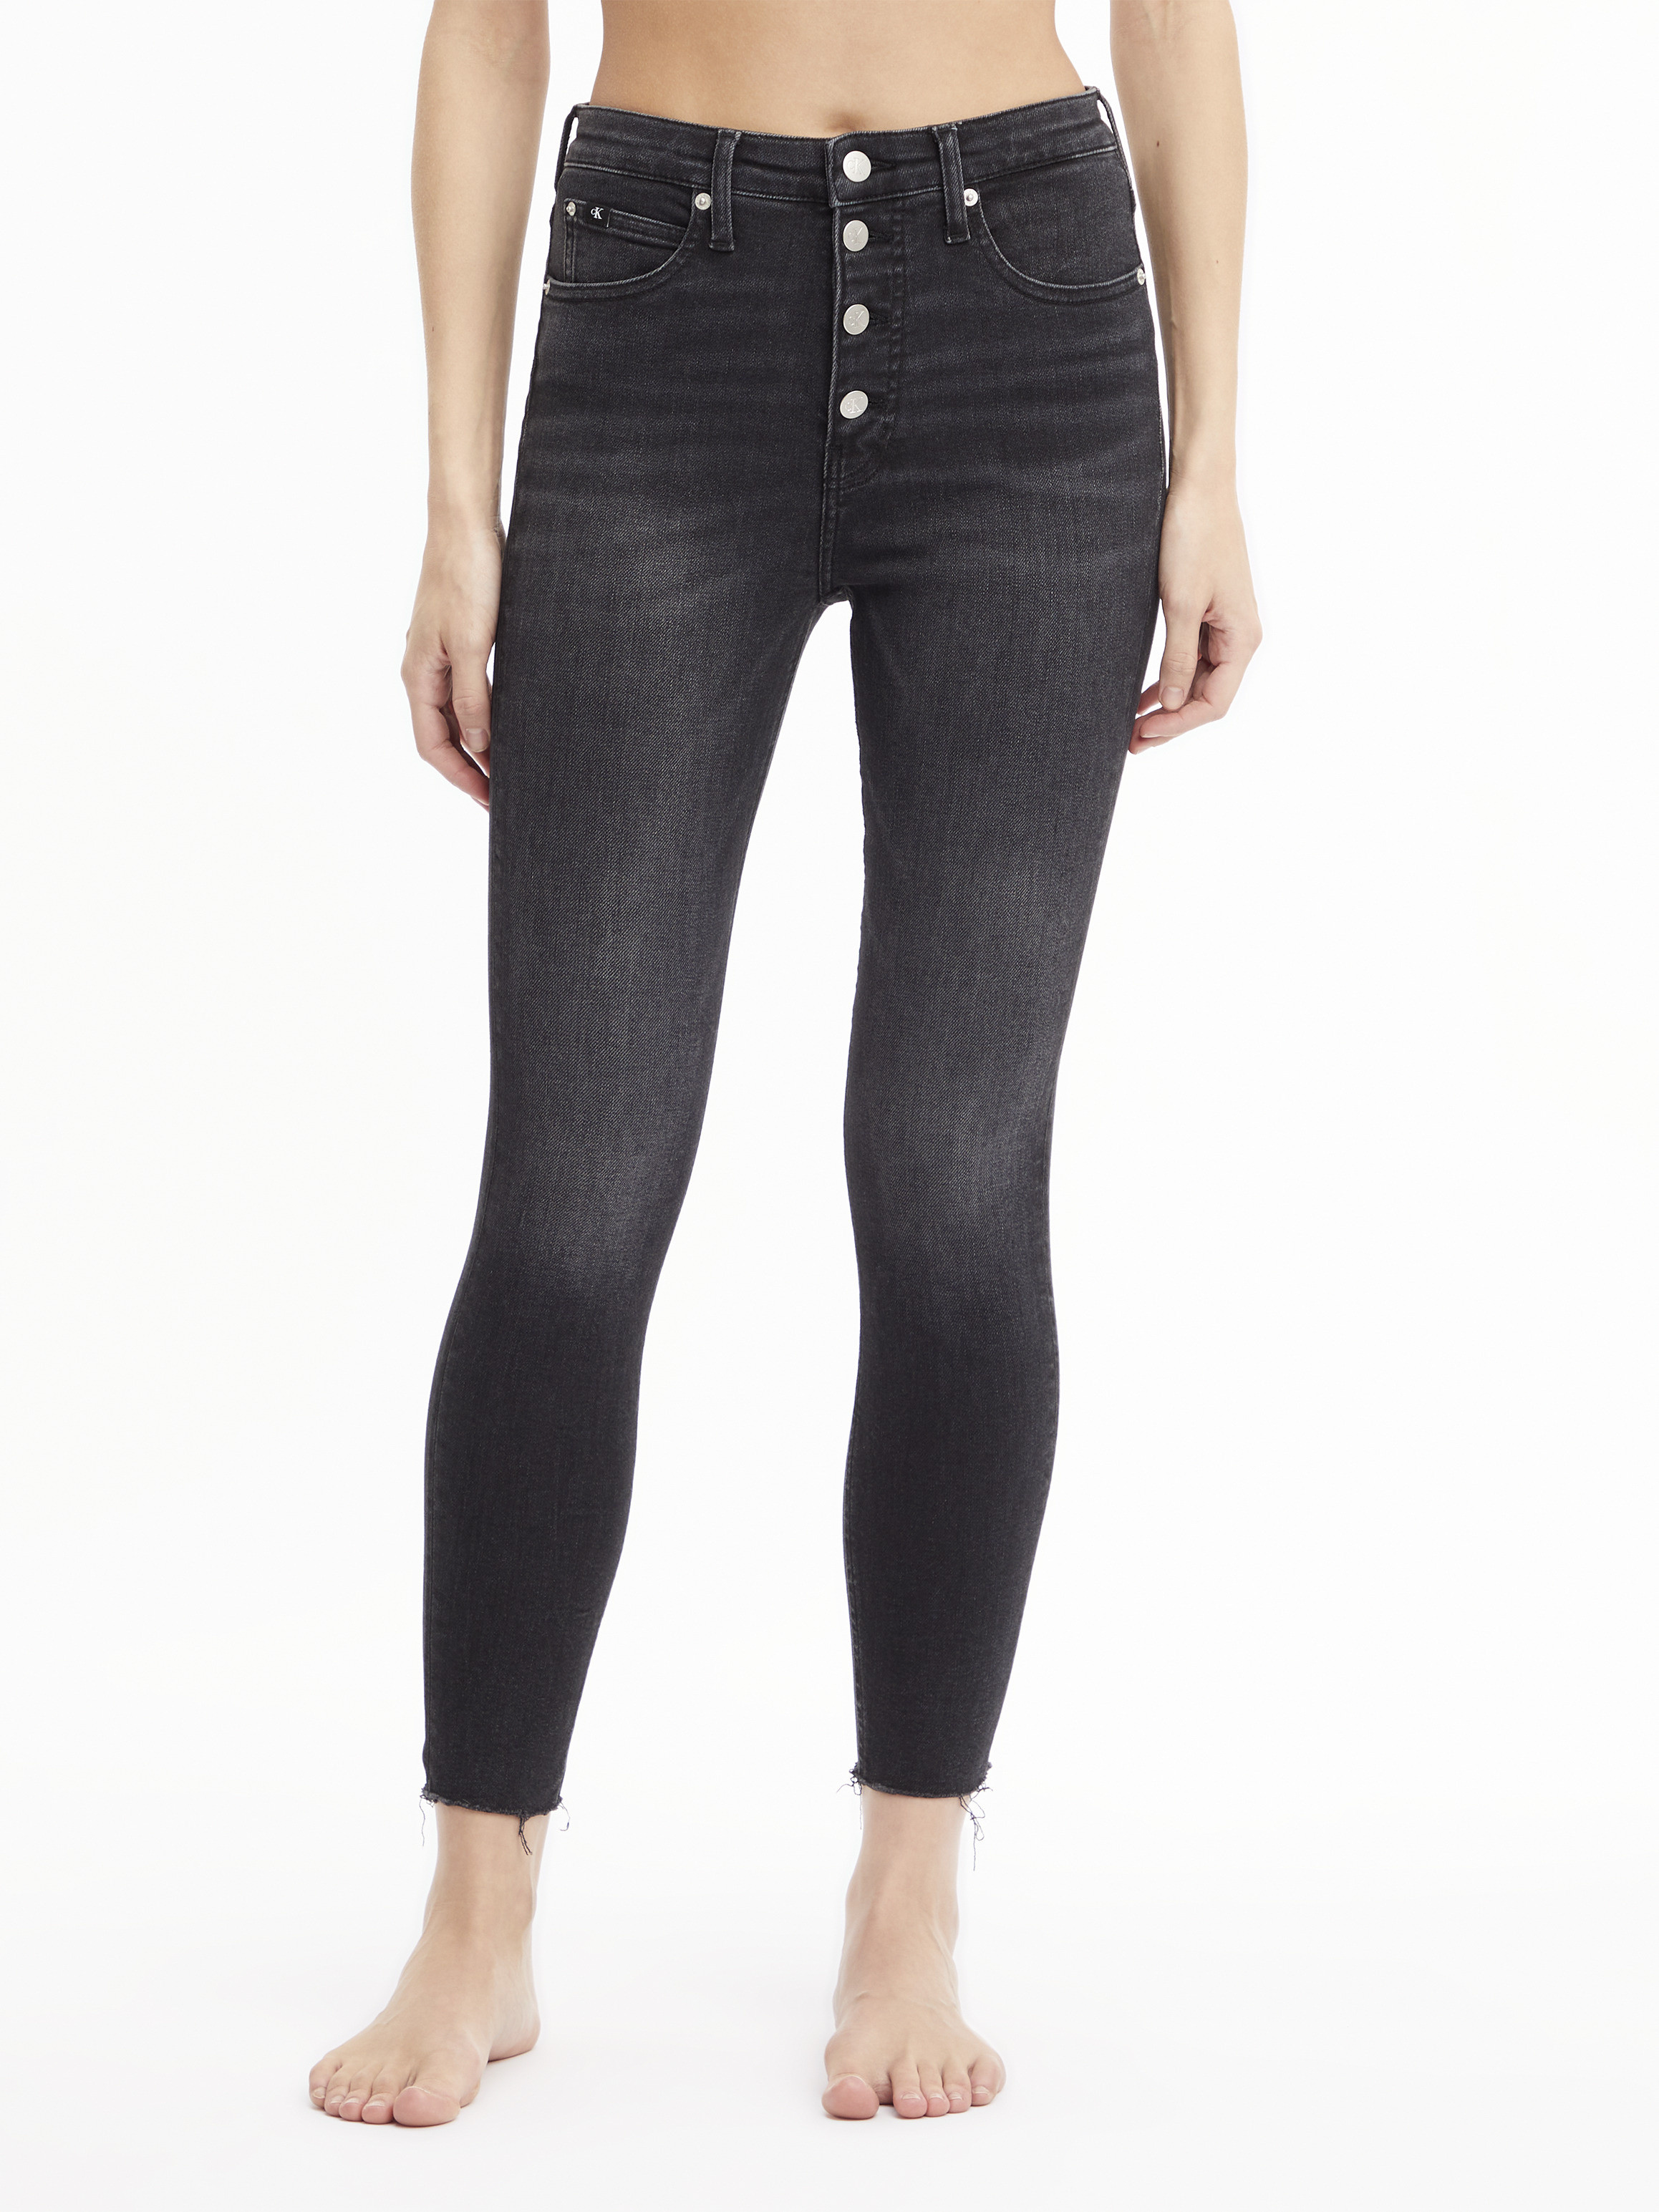 Calvin Klein Jeans - Jeans cinque tasche super skinny, Nero, large image number 4